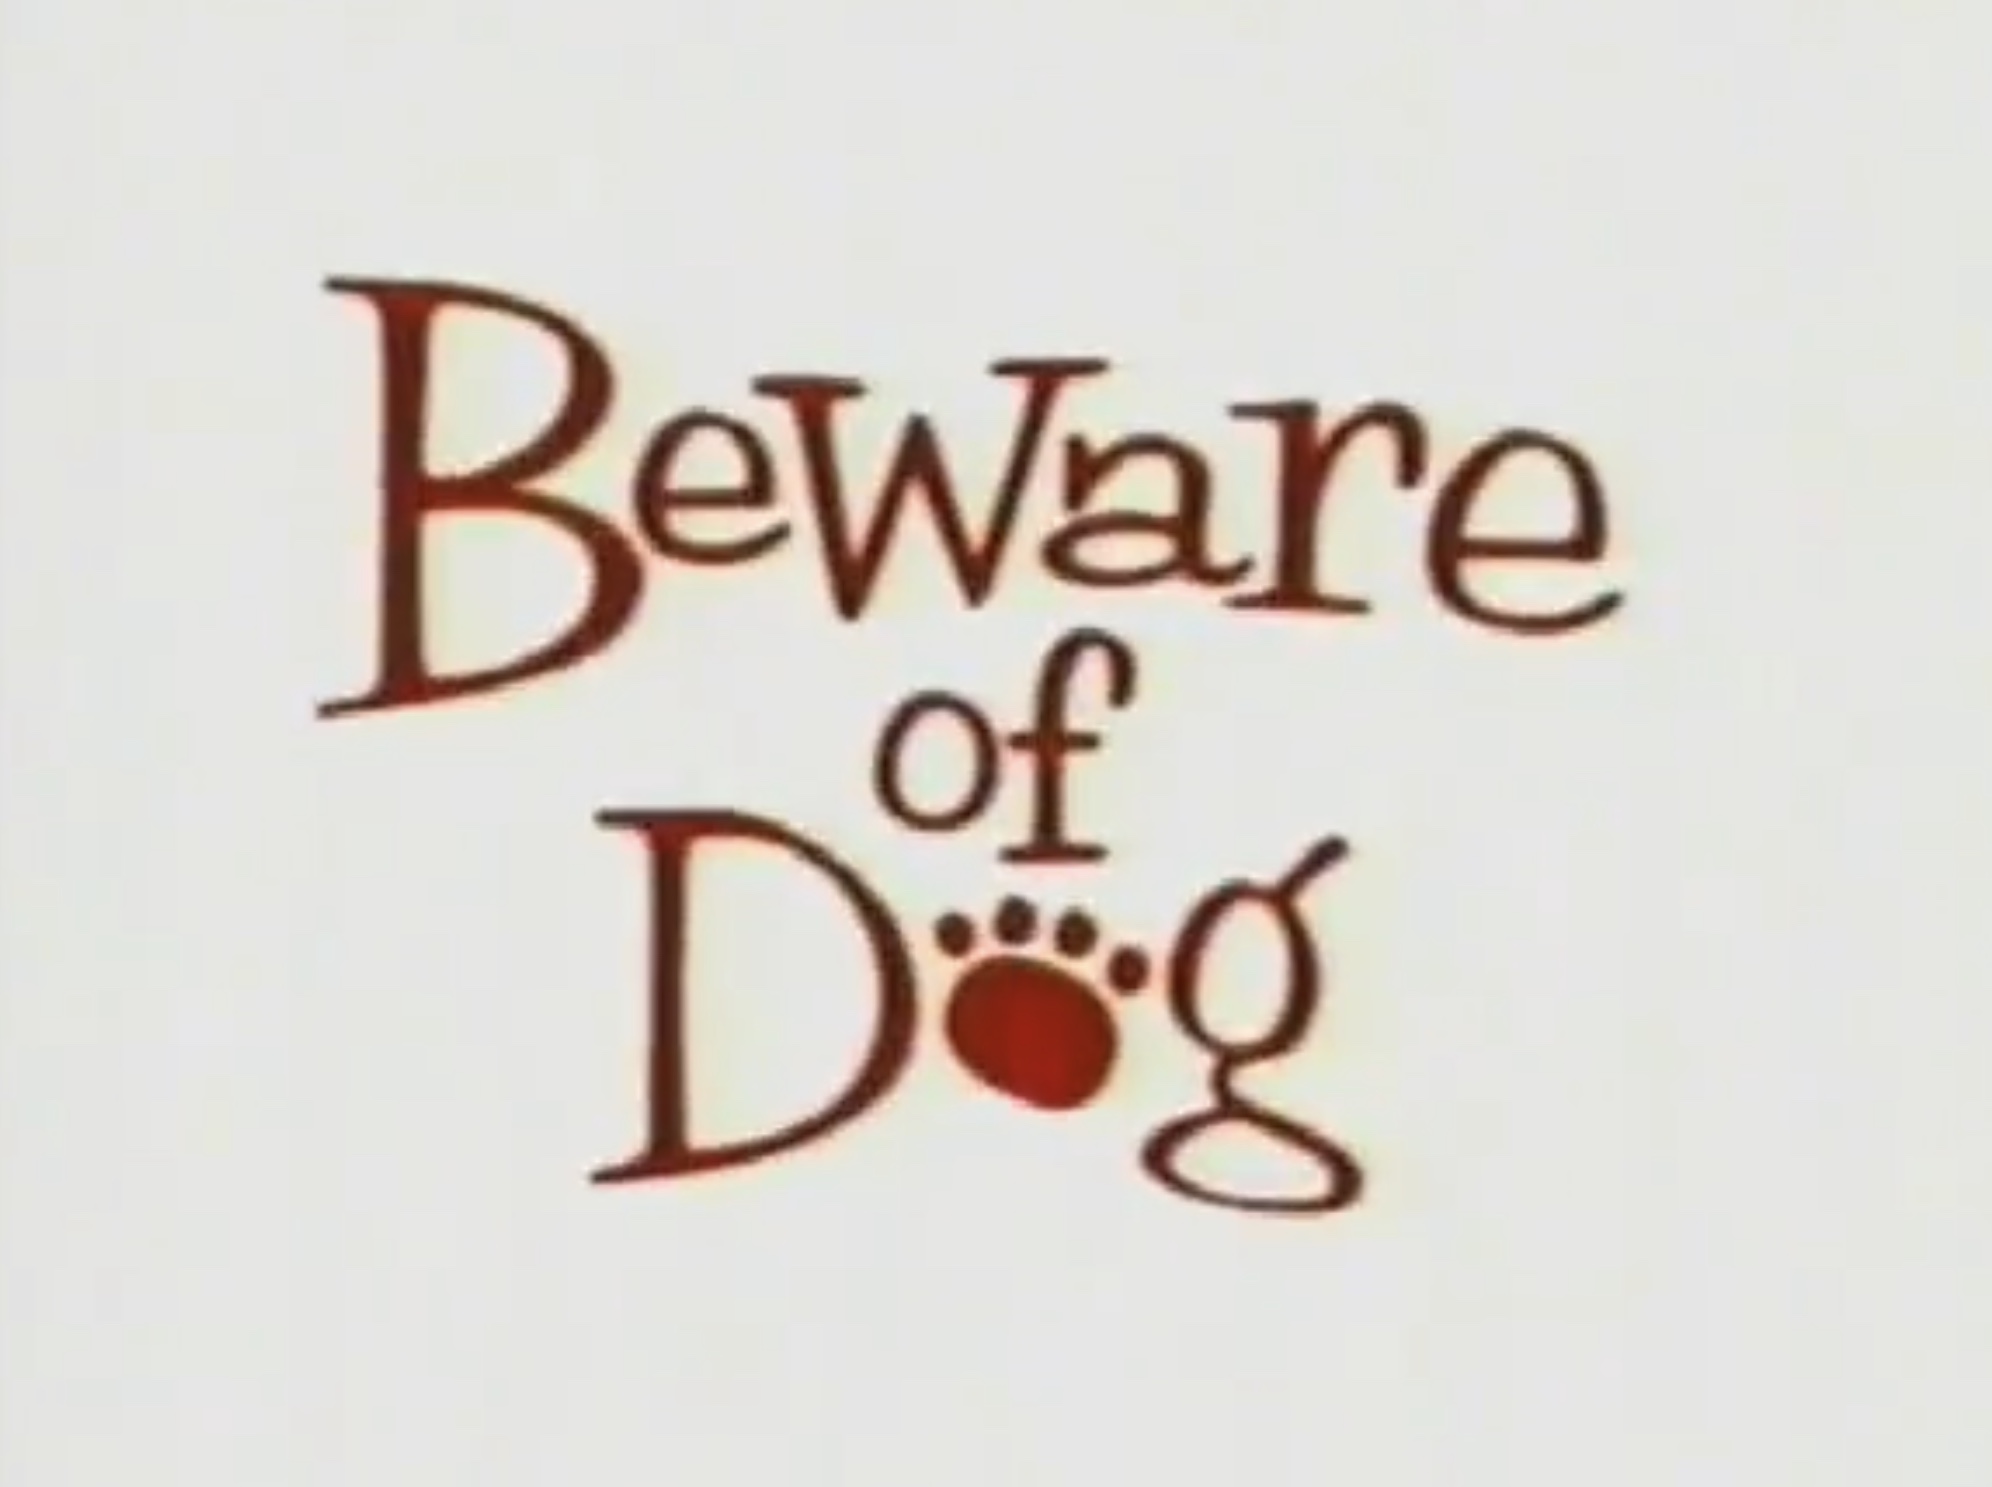 Beware of dog title.jpeg